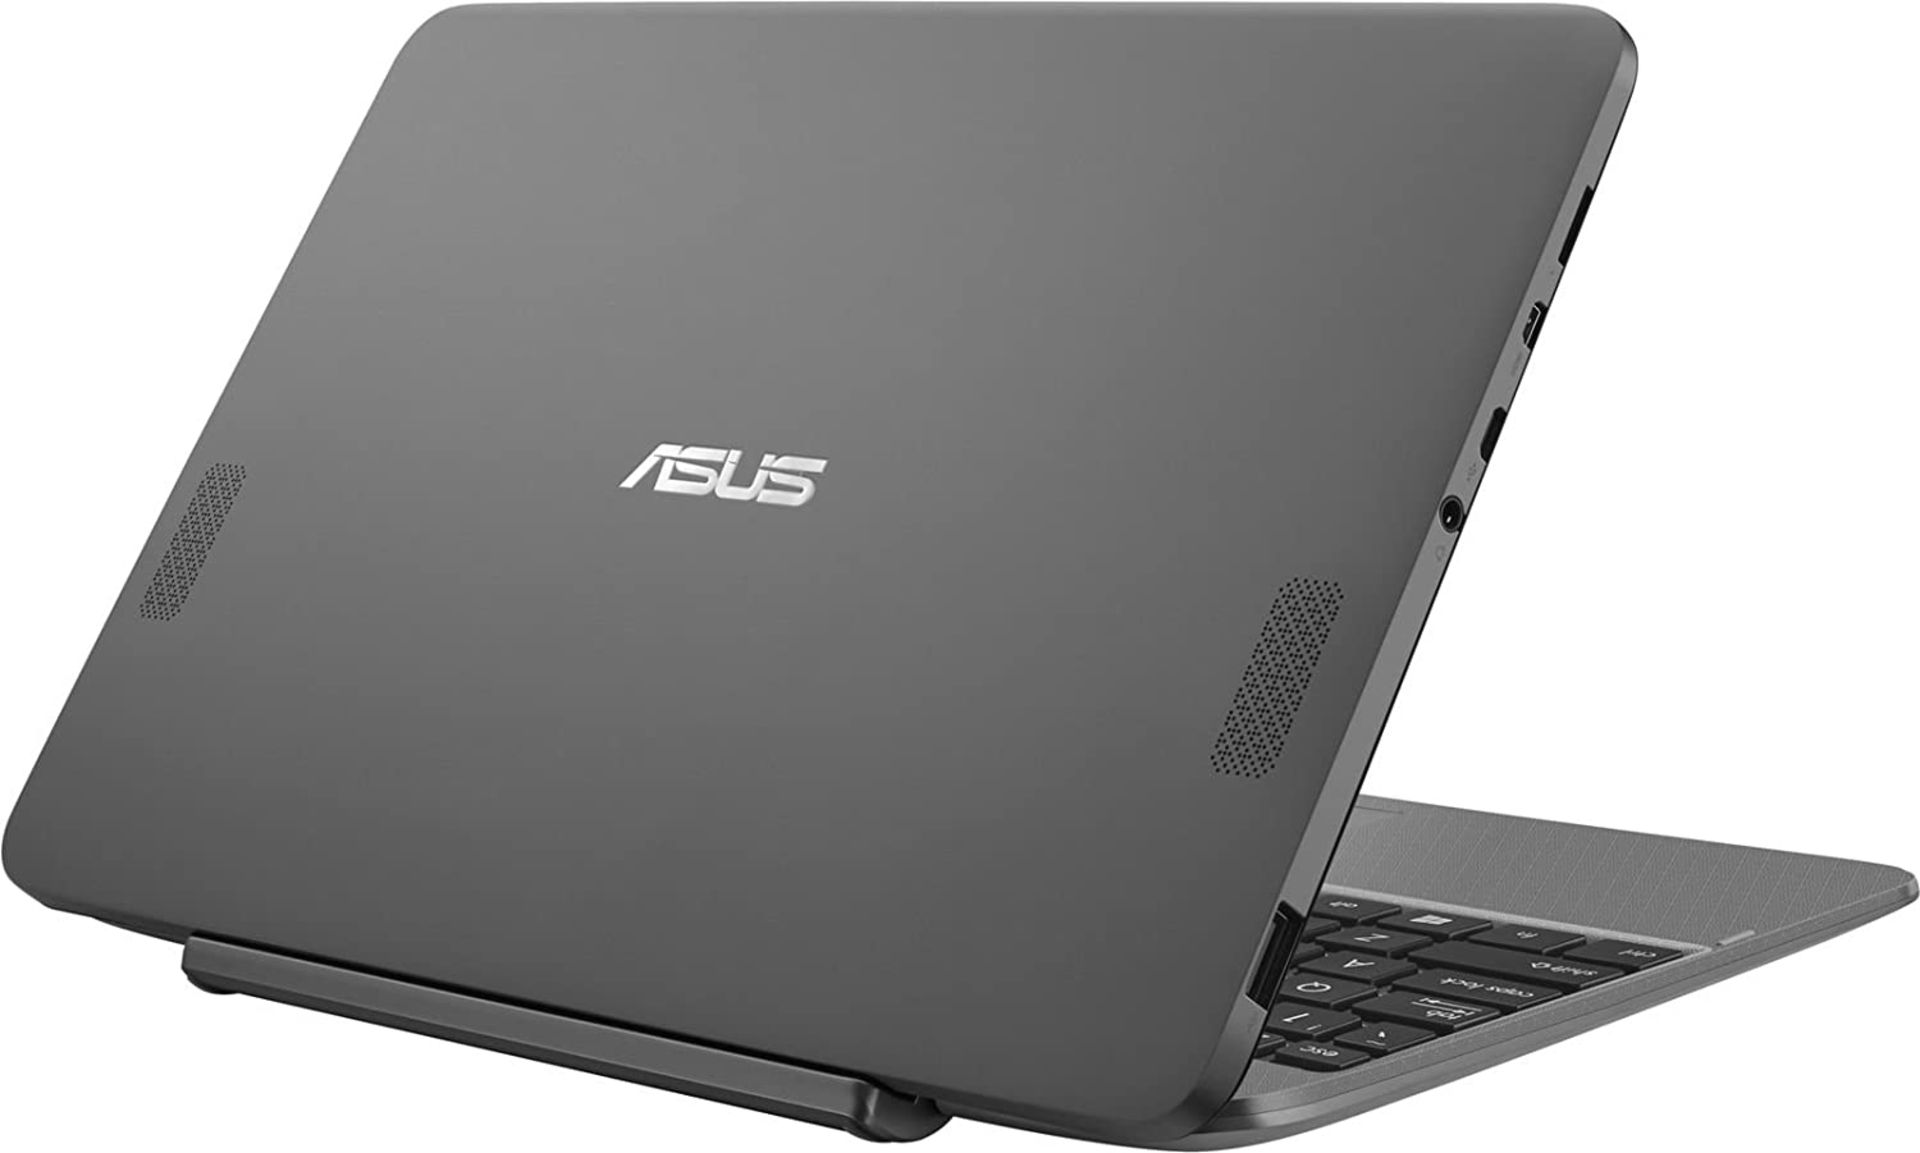 (5) 1 x Grade B - Asus Transformer Book T101HA (10.1 inch) Notebook PC Atom (Z8350) 2GB 32GB Wi... - Image 7 of 7